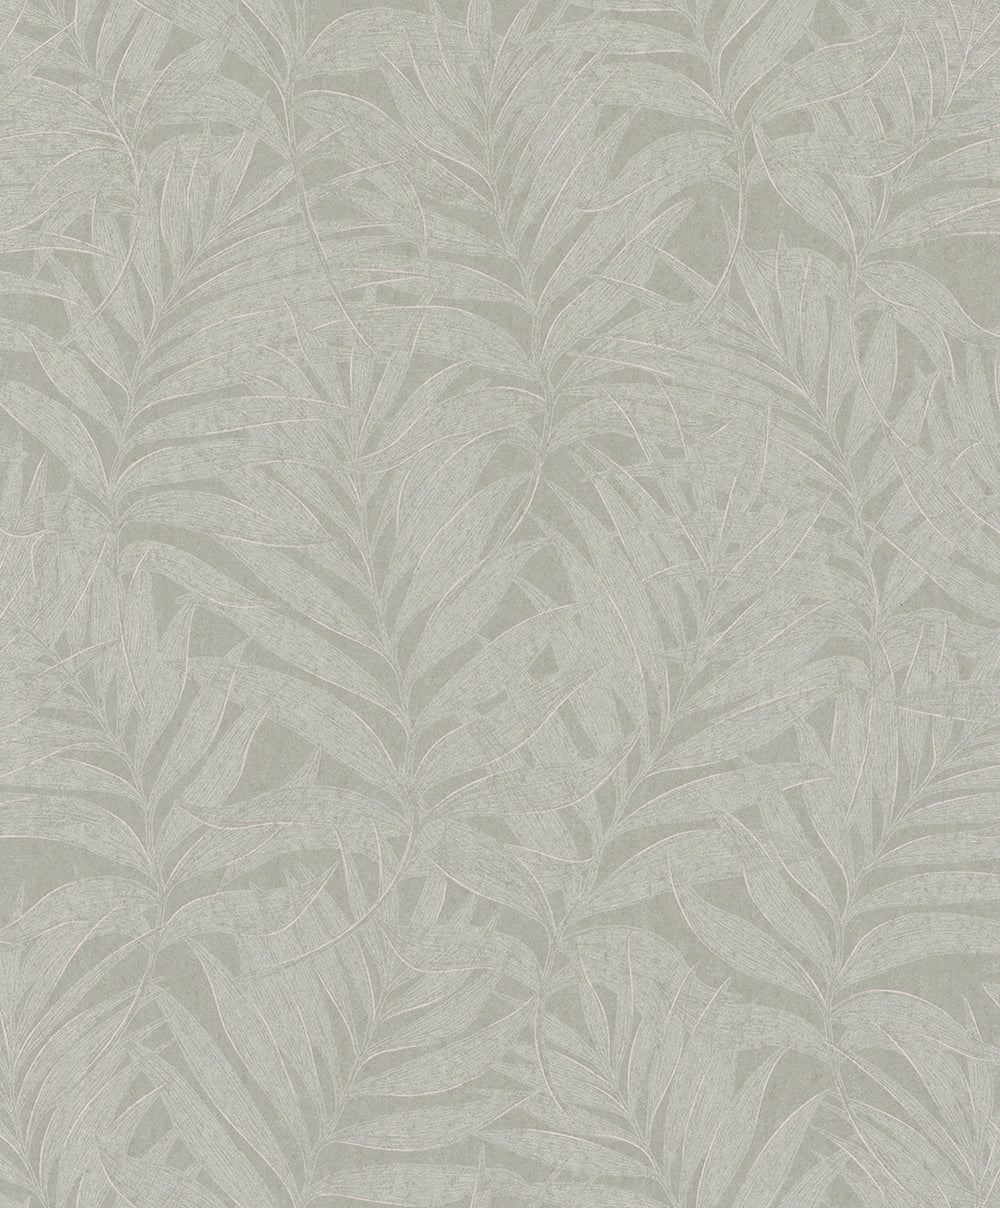 Habitat - Leaves botanical wallpaper Marburg Roll Beige-Grey  34004